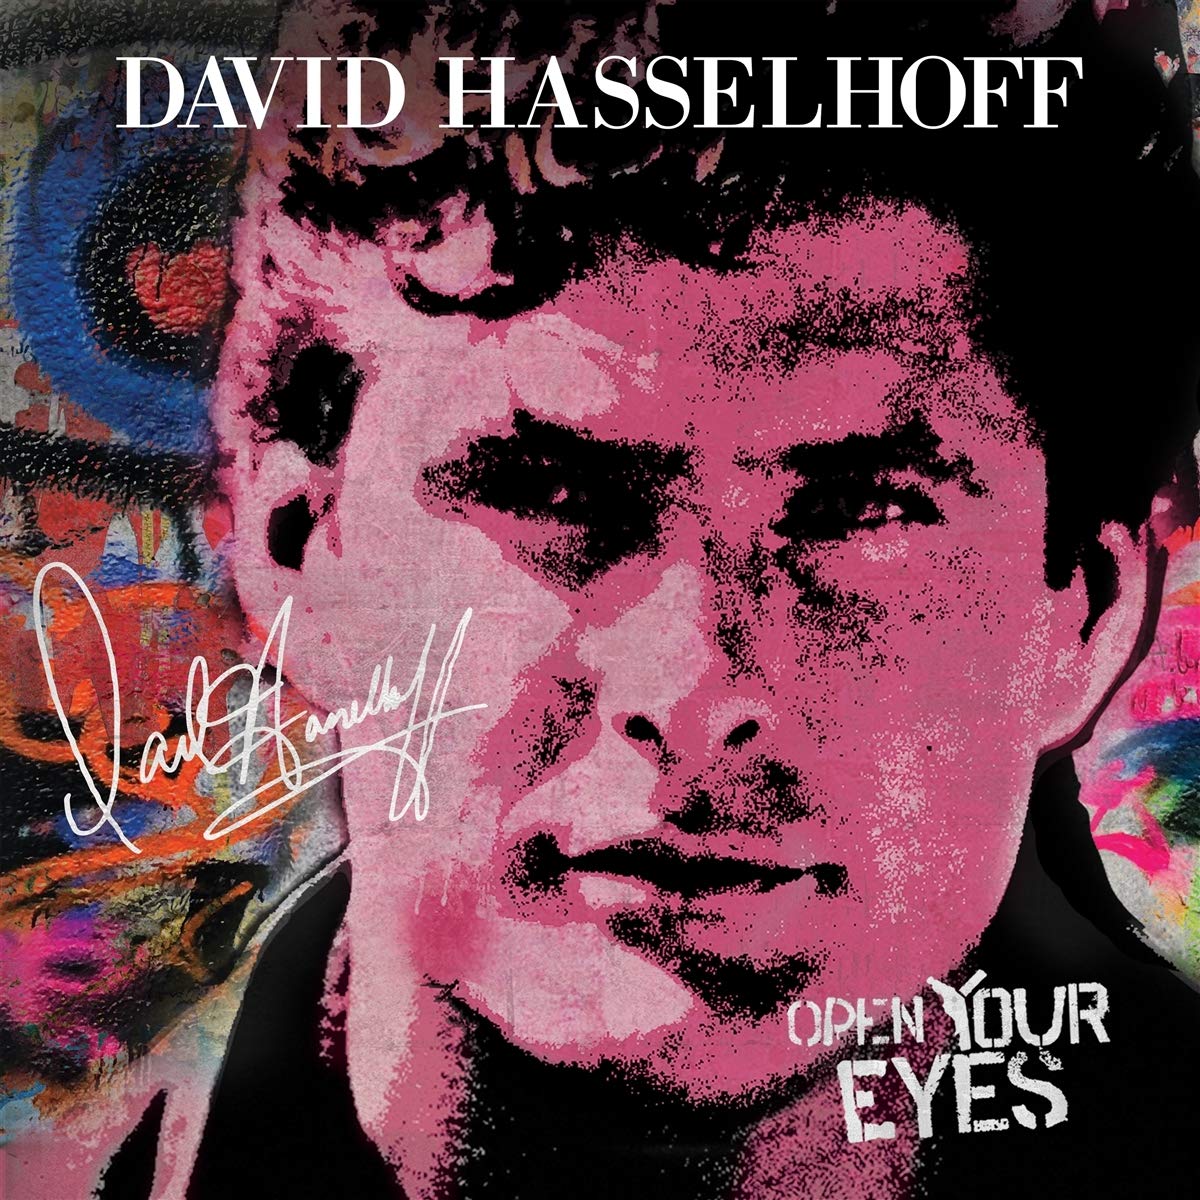 David Hasselhoff "Open Your Eyes" LP